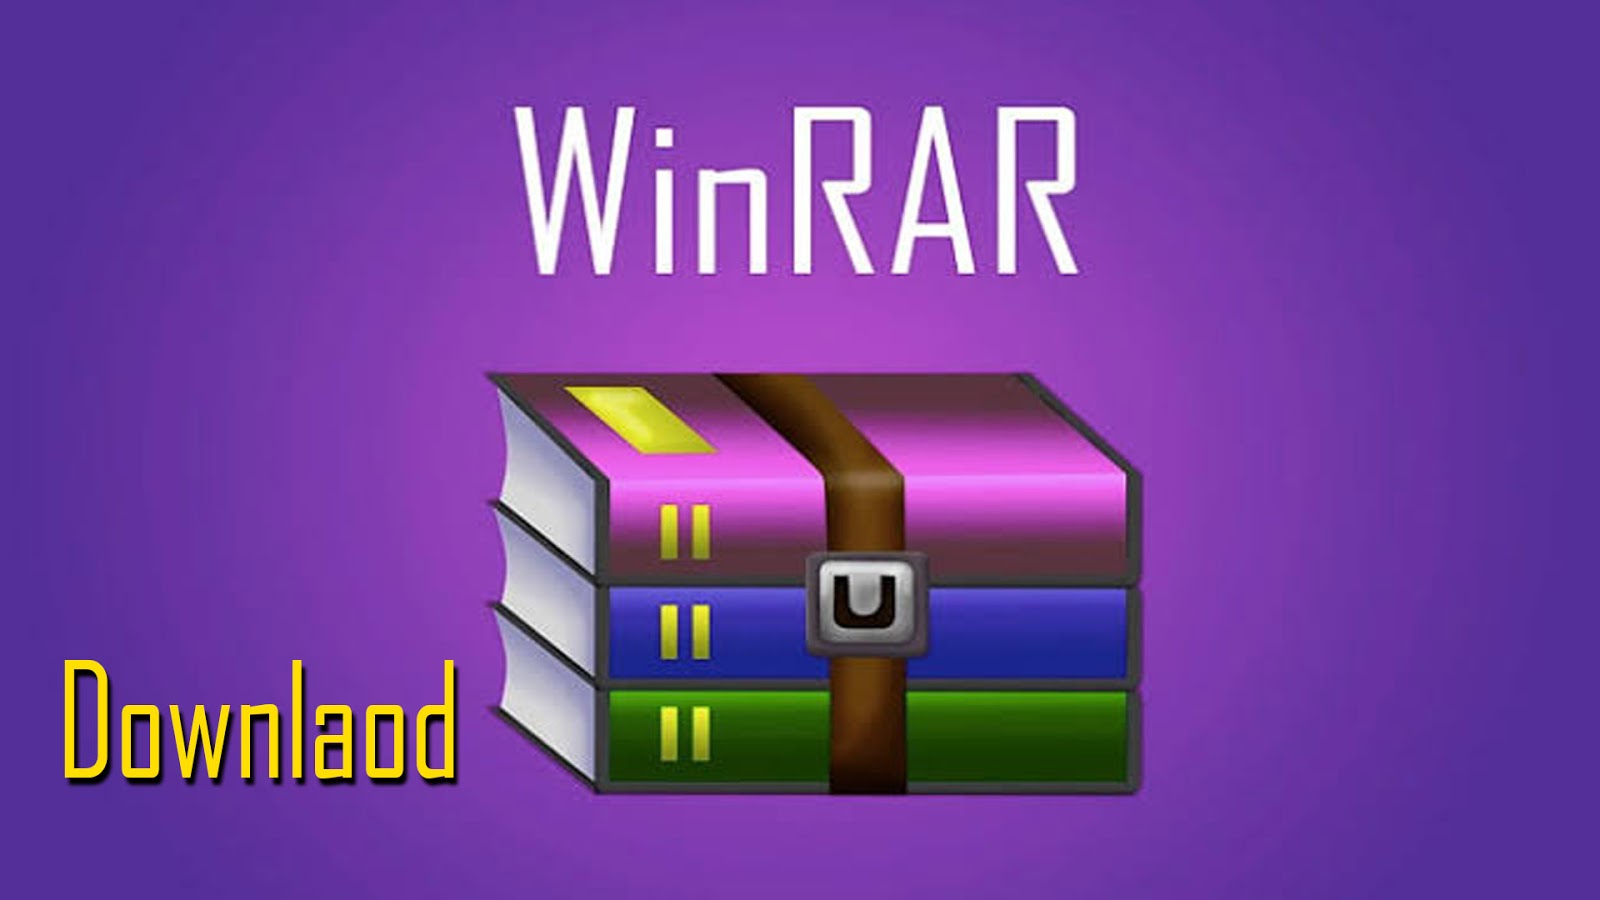 winrar free download for windows 8 64 bit softpedia